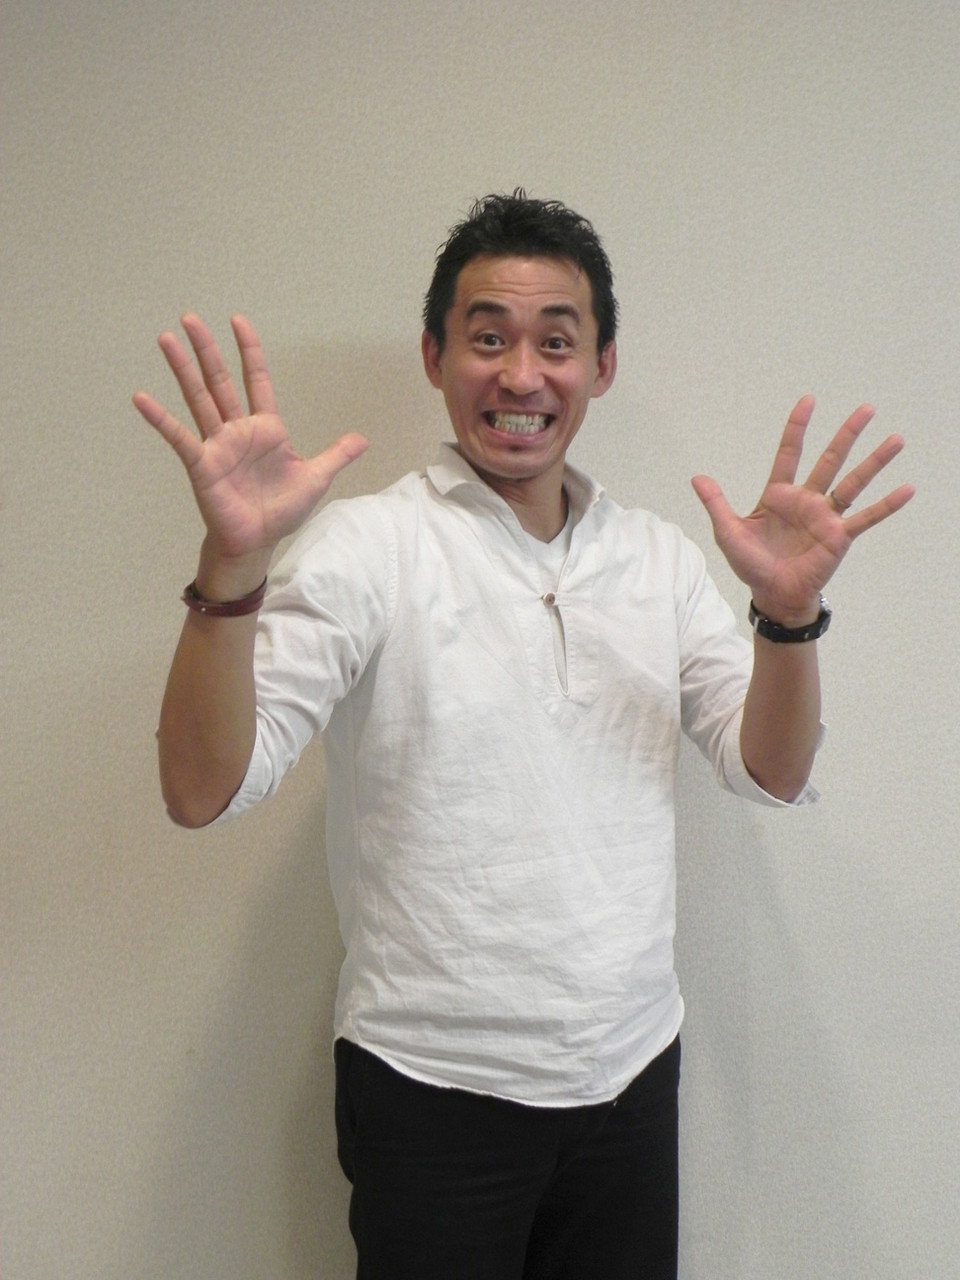 http://news.yoshimoto.co.jp/photos/uncategorized/2014/10/17/dscn8077.jpg